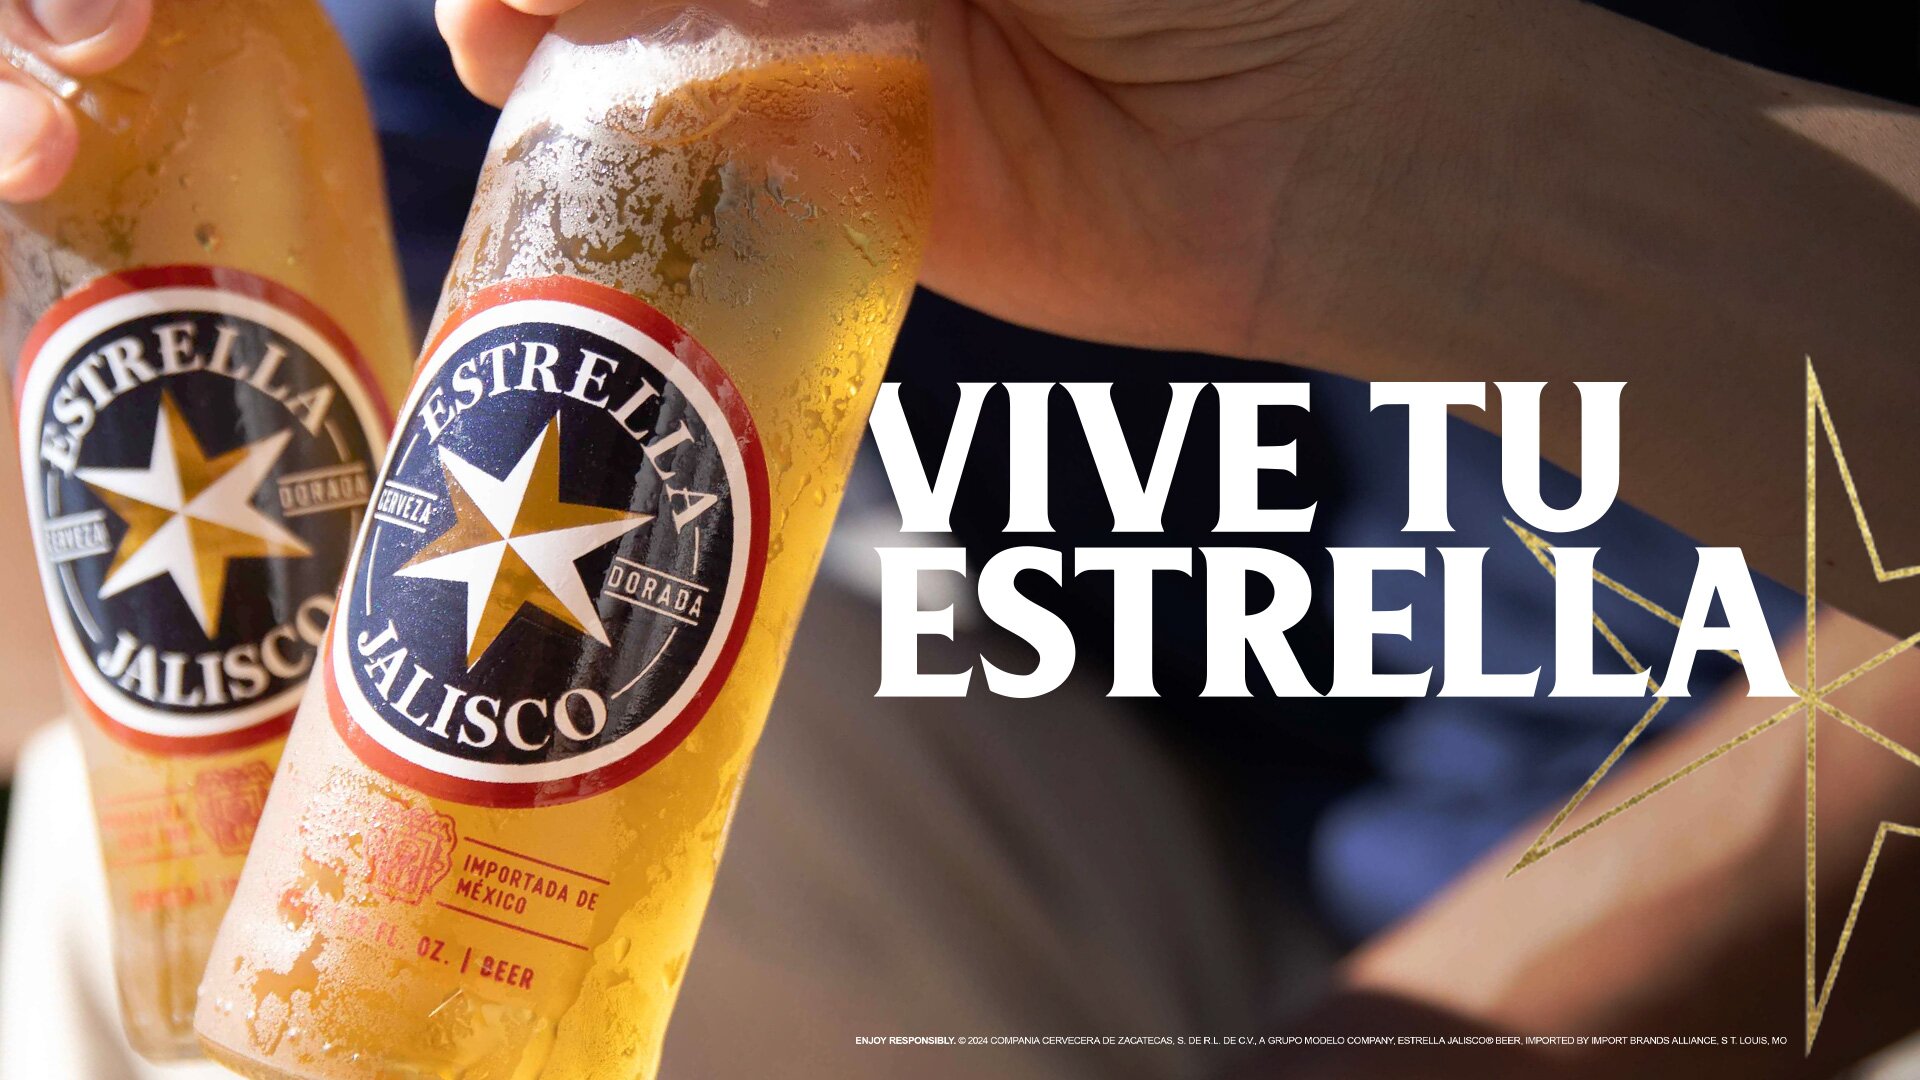 Estrella Jalisco’s Refreshed Vive tu Estrella Campaign Celebrates Modern Mexican Culture with New Ads